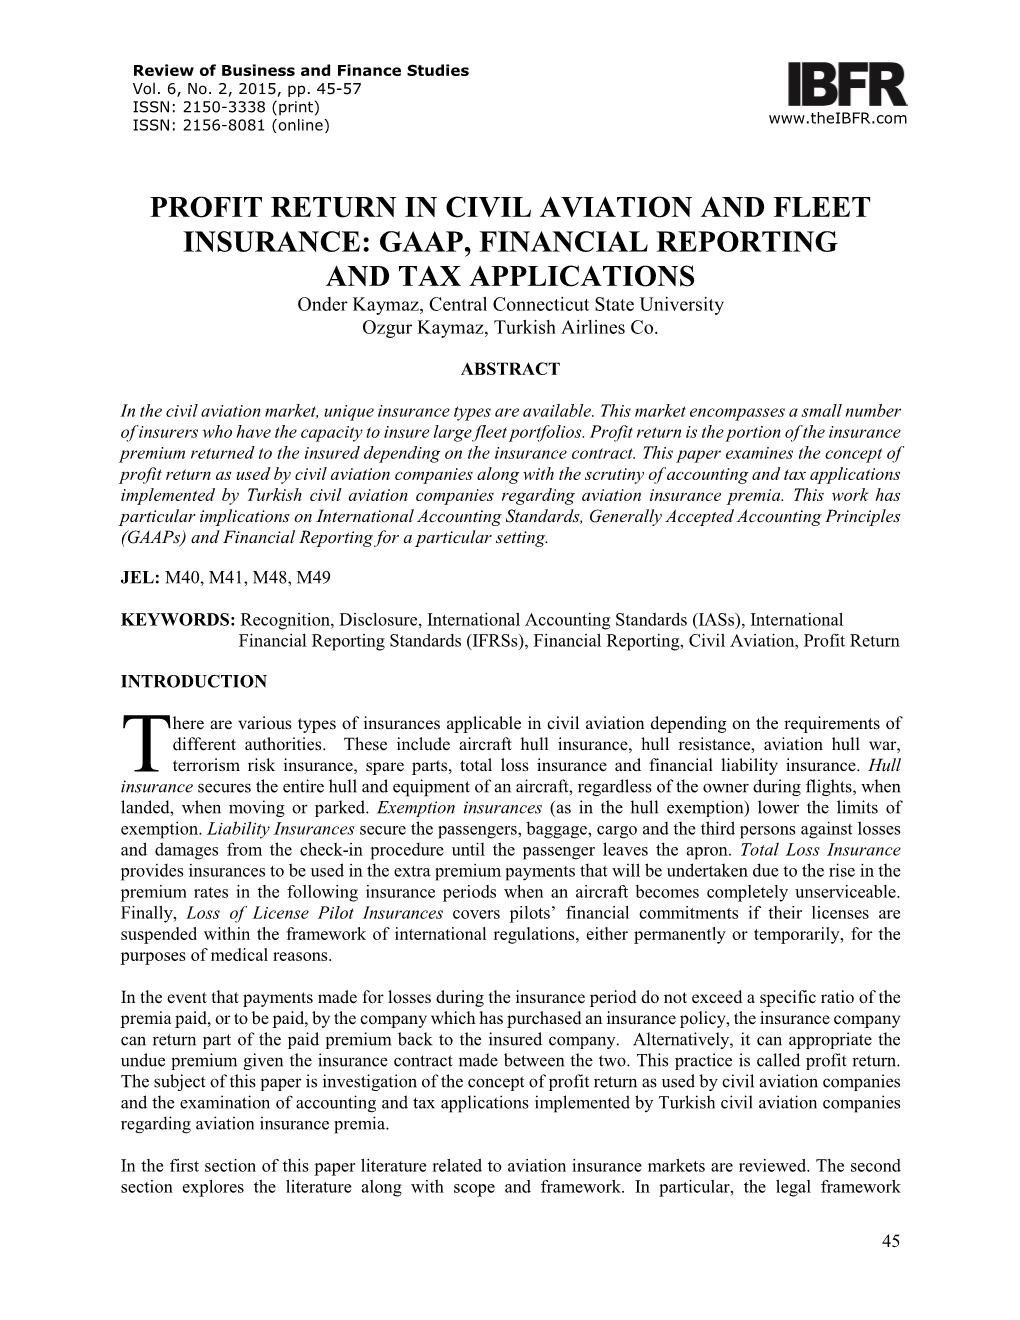 Profit Return in Civil Aviation and Fleet Insurance: Gaap